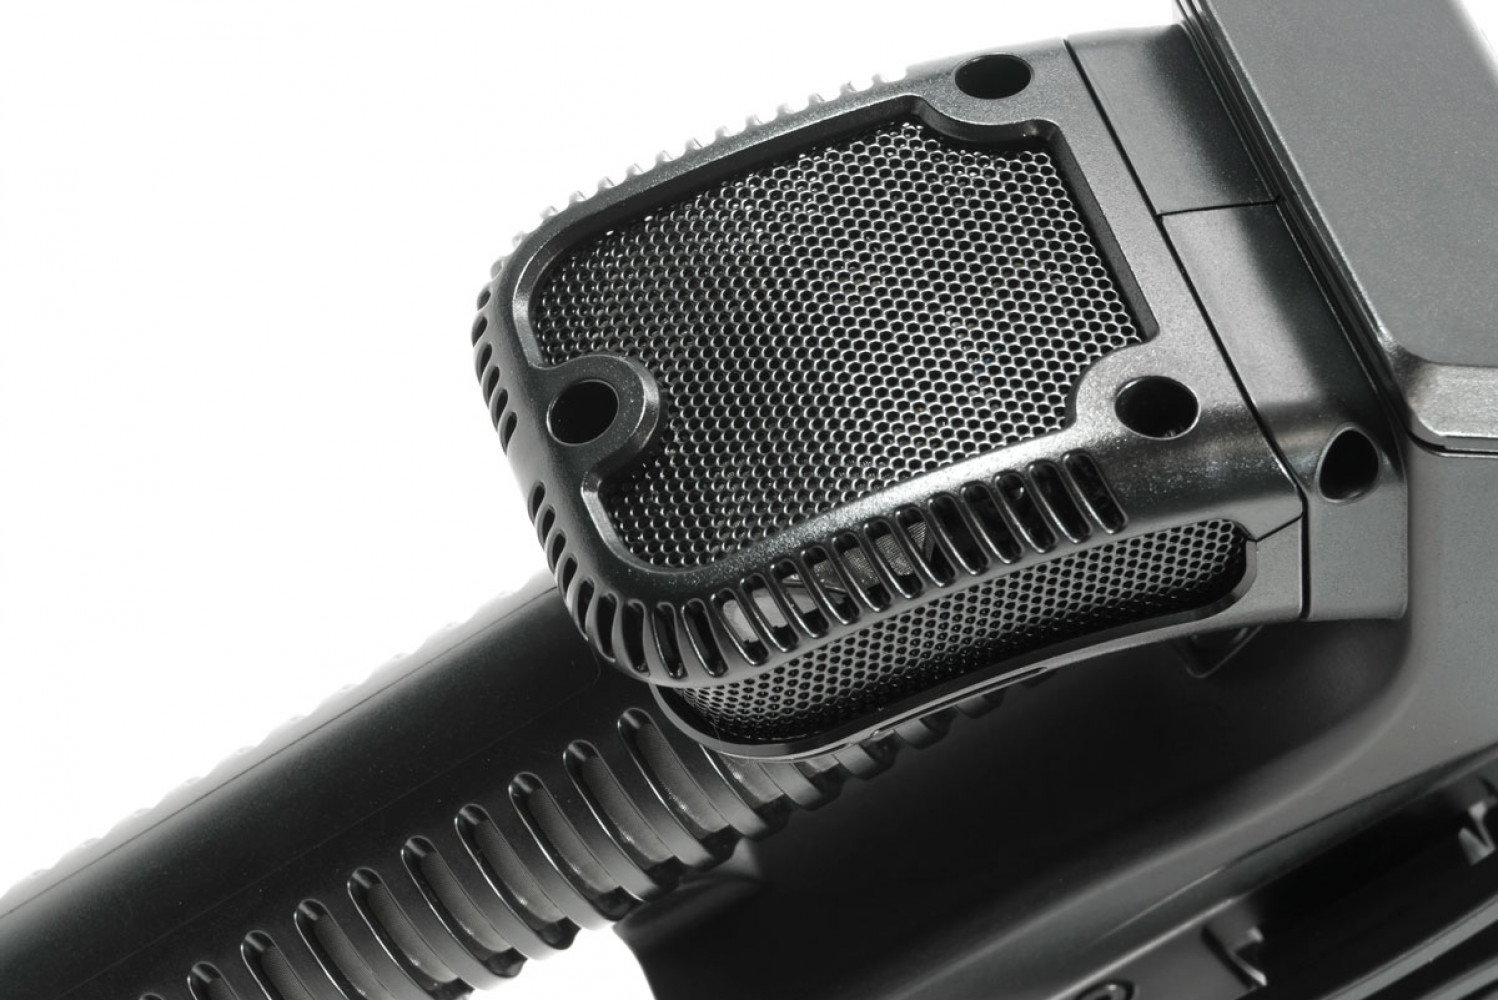 Azden SMX-30 Stereo/Mono Switchable Shotgun Video Microphone